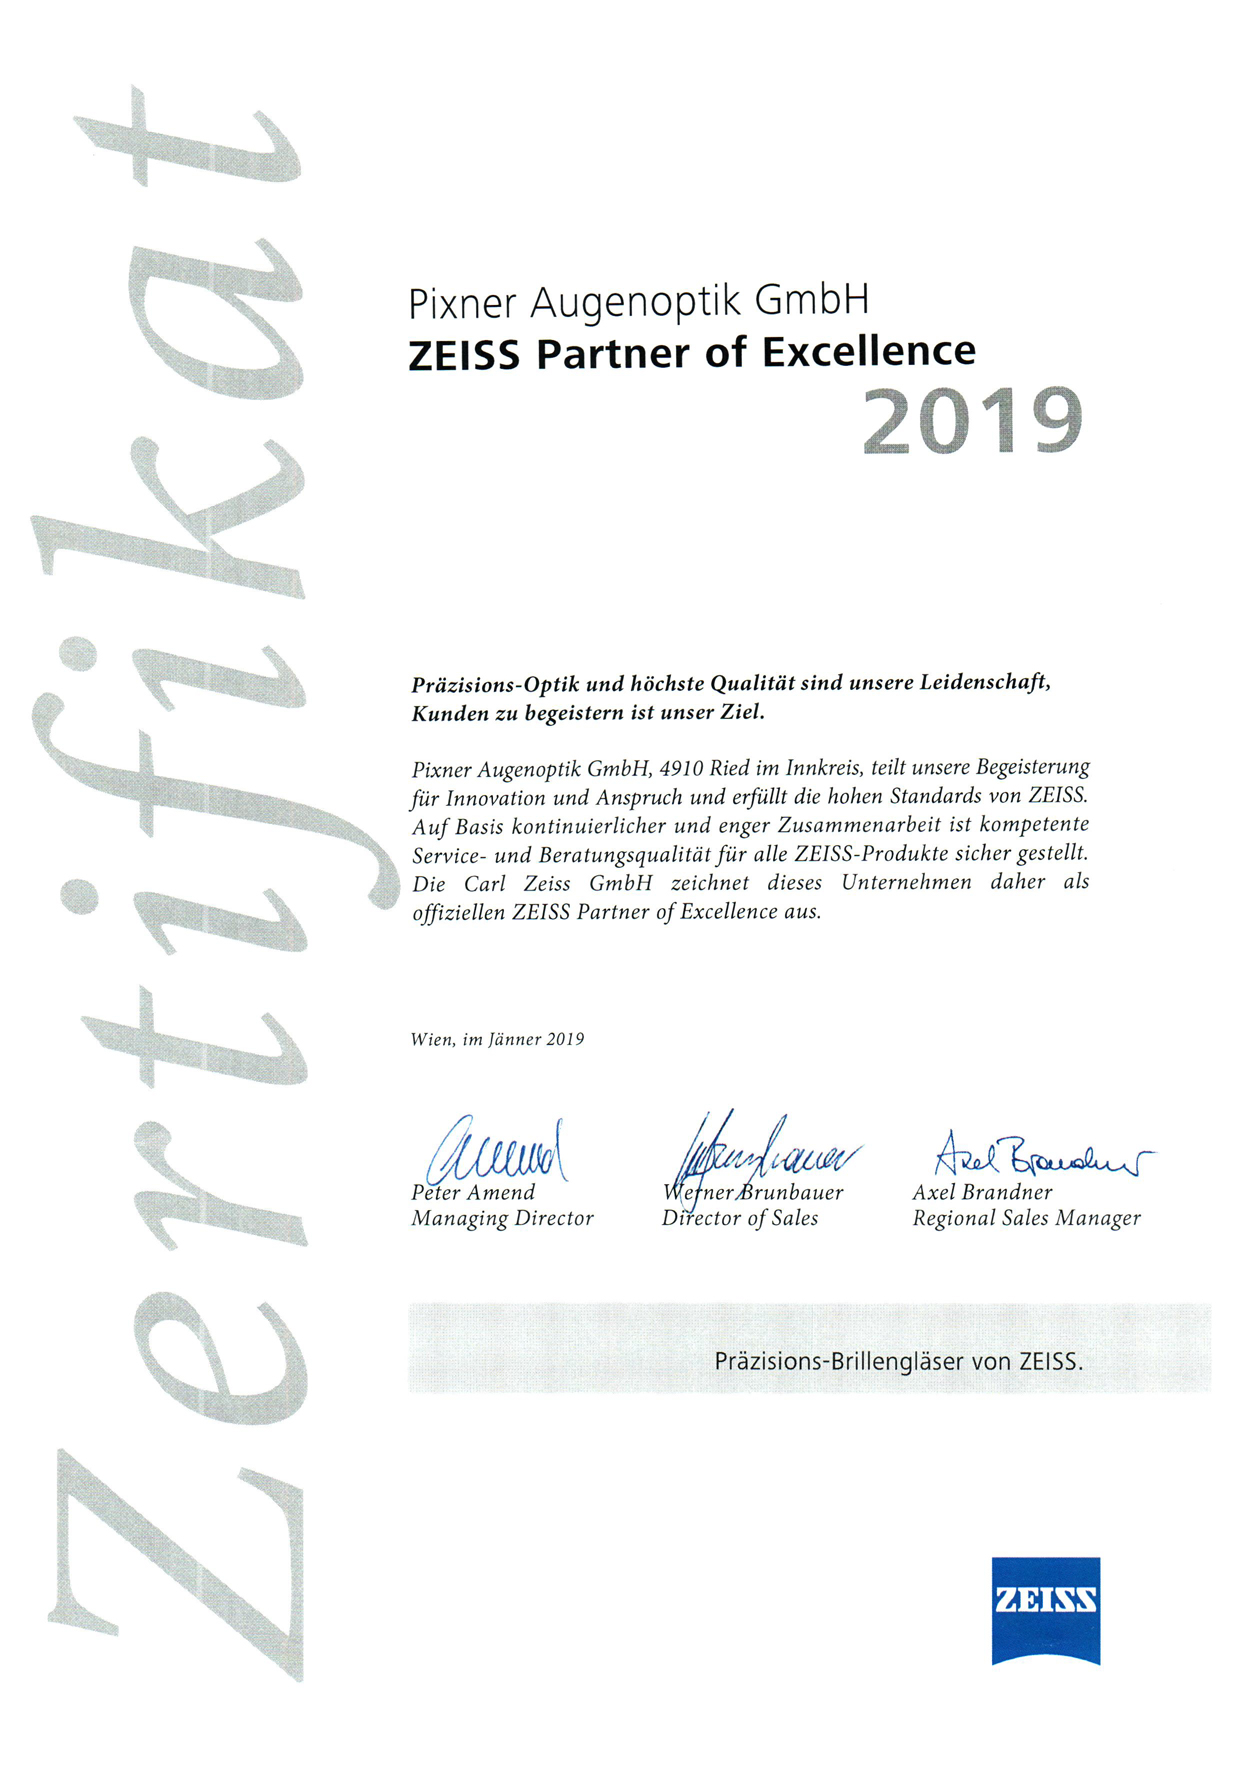 zeiss-partner-of-excellence-2019.jpg